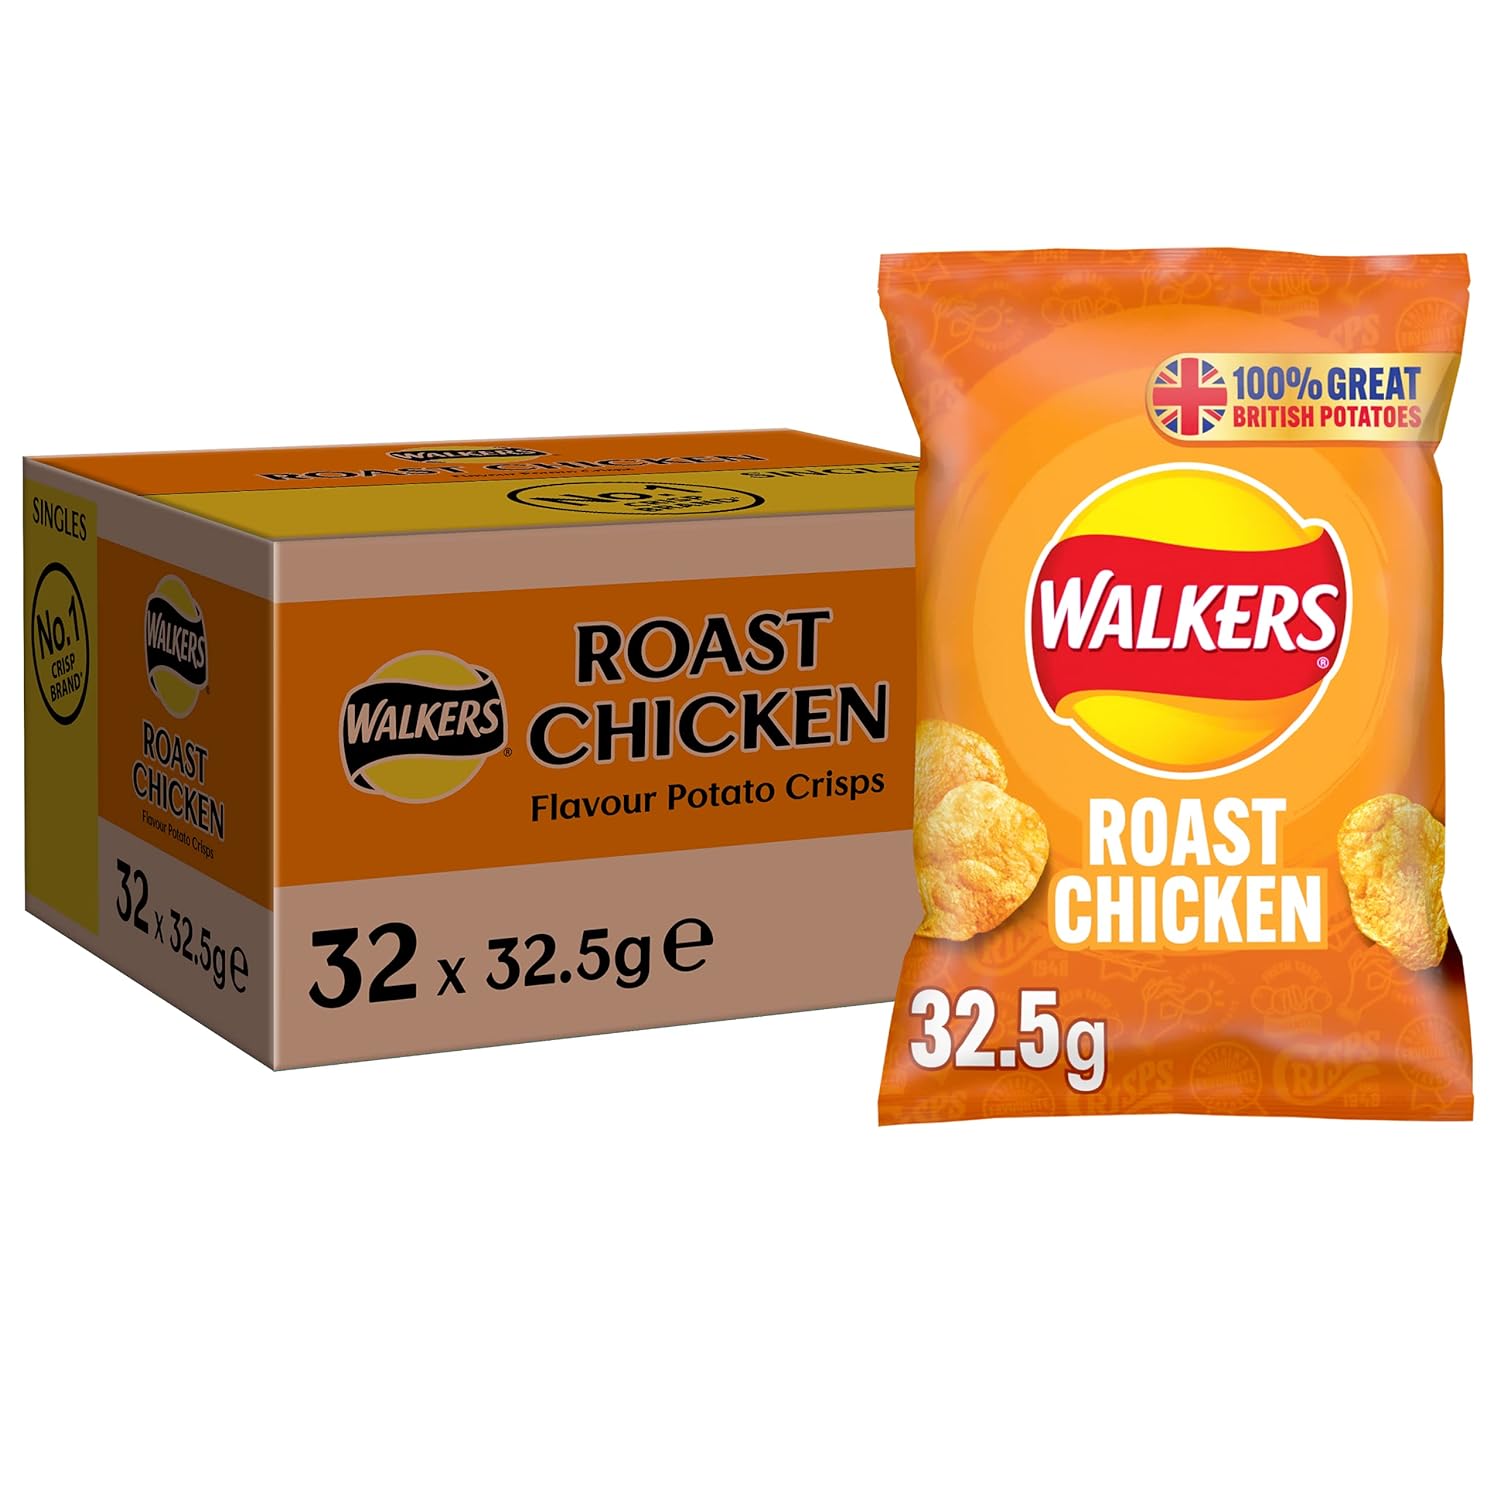 Walkers Roast Chicken Crisps - 32.5g - Pack of 32